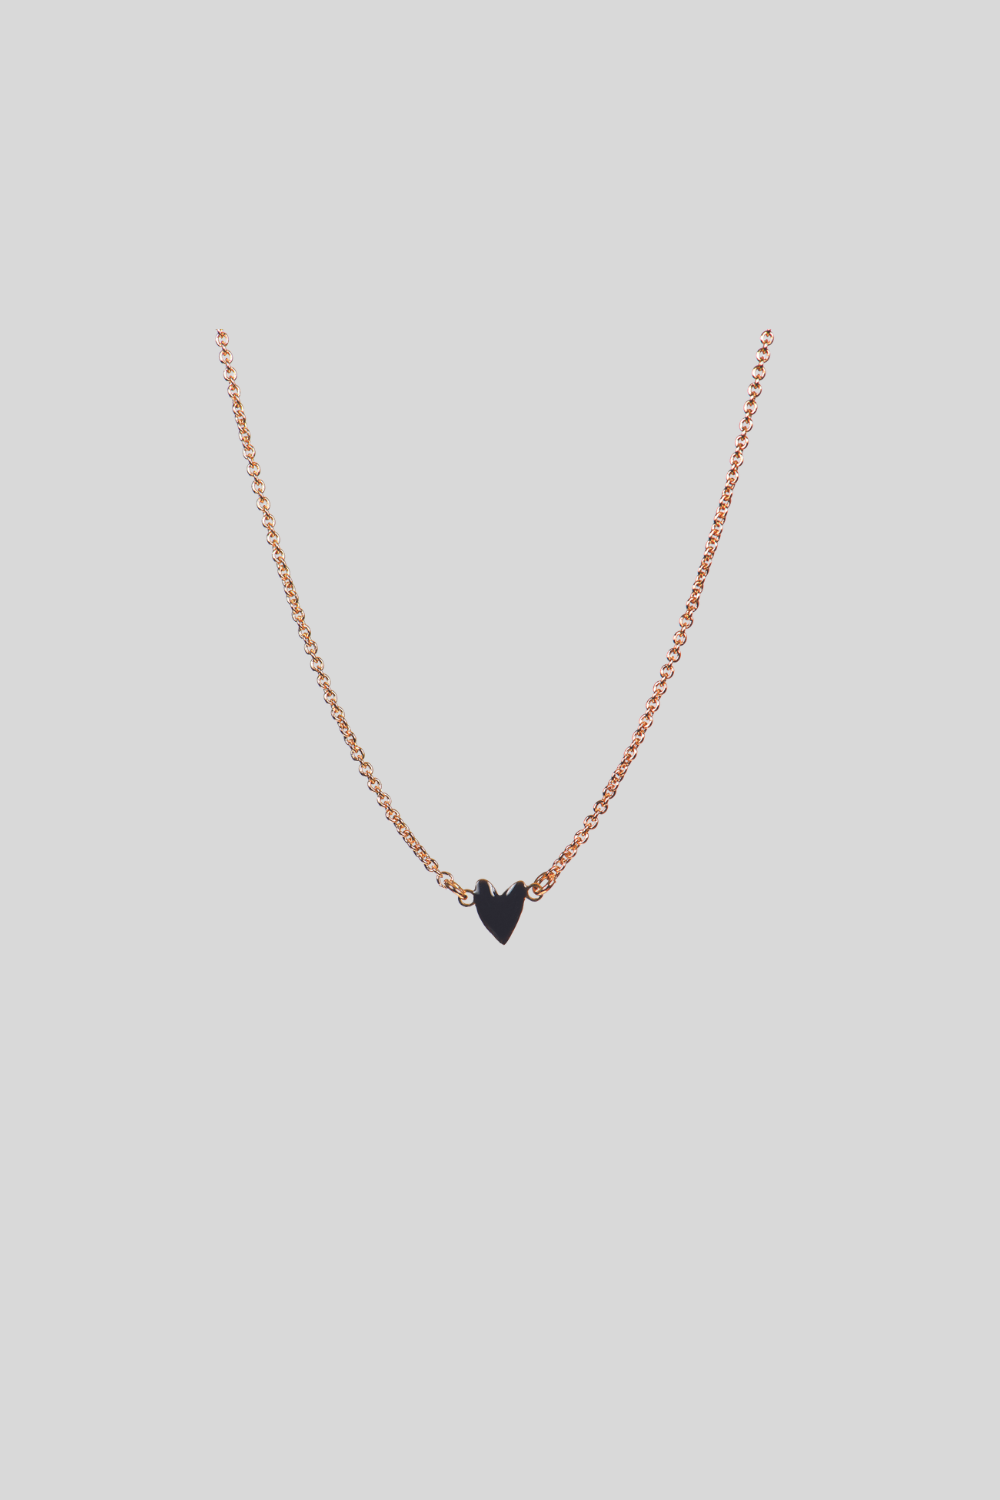 GRANT heart necklace - black